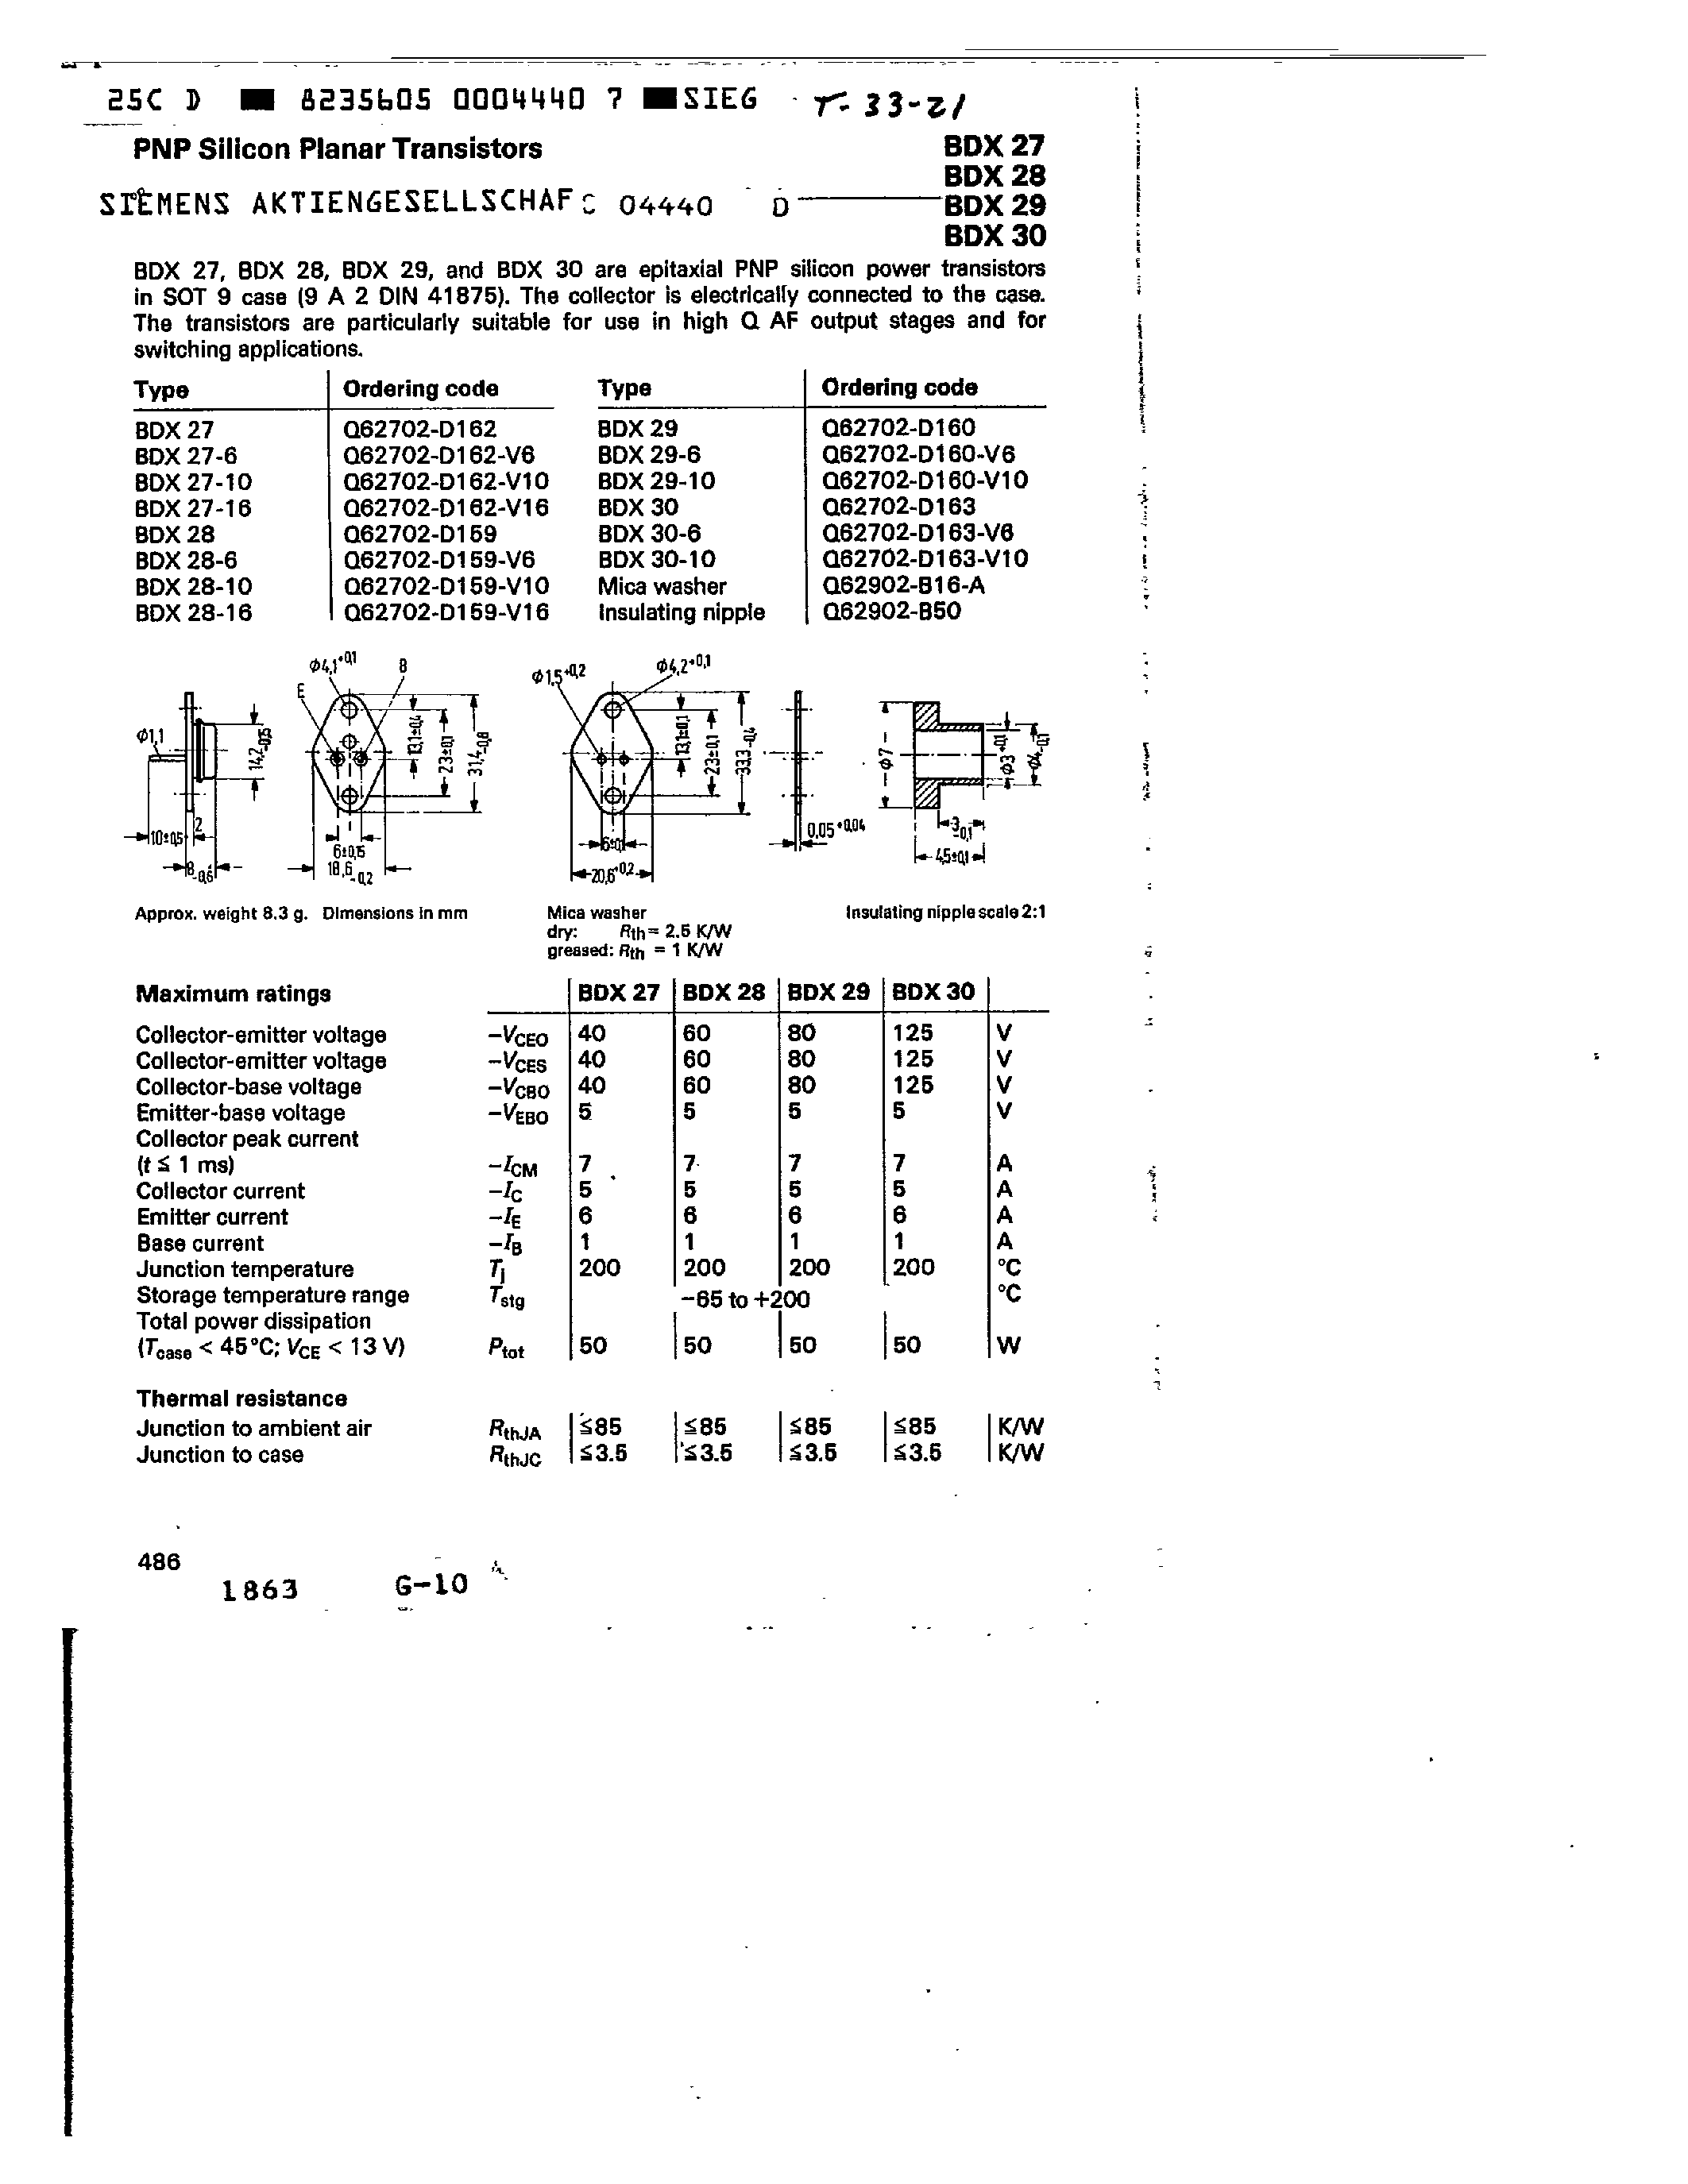 Datasheet BDX28-6 - PNP SILICON PLANAR TRANSISTORS page 1